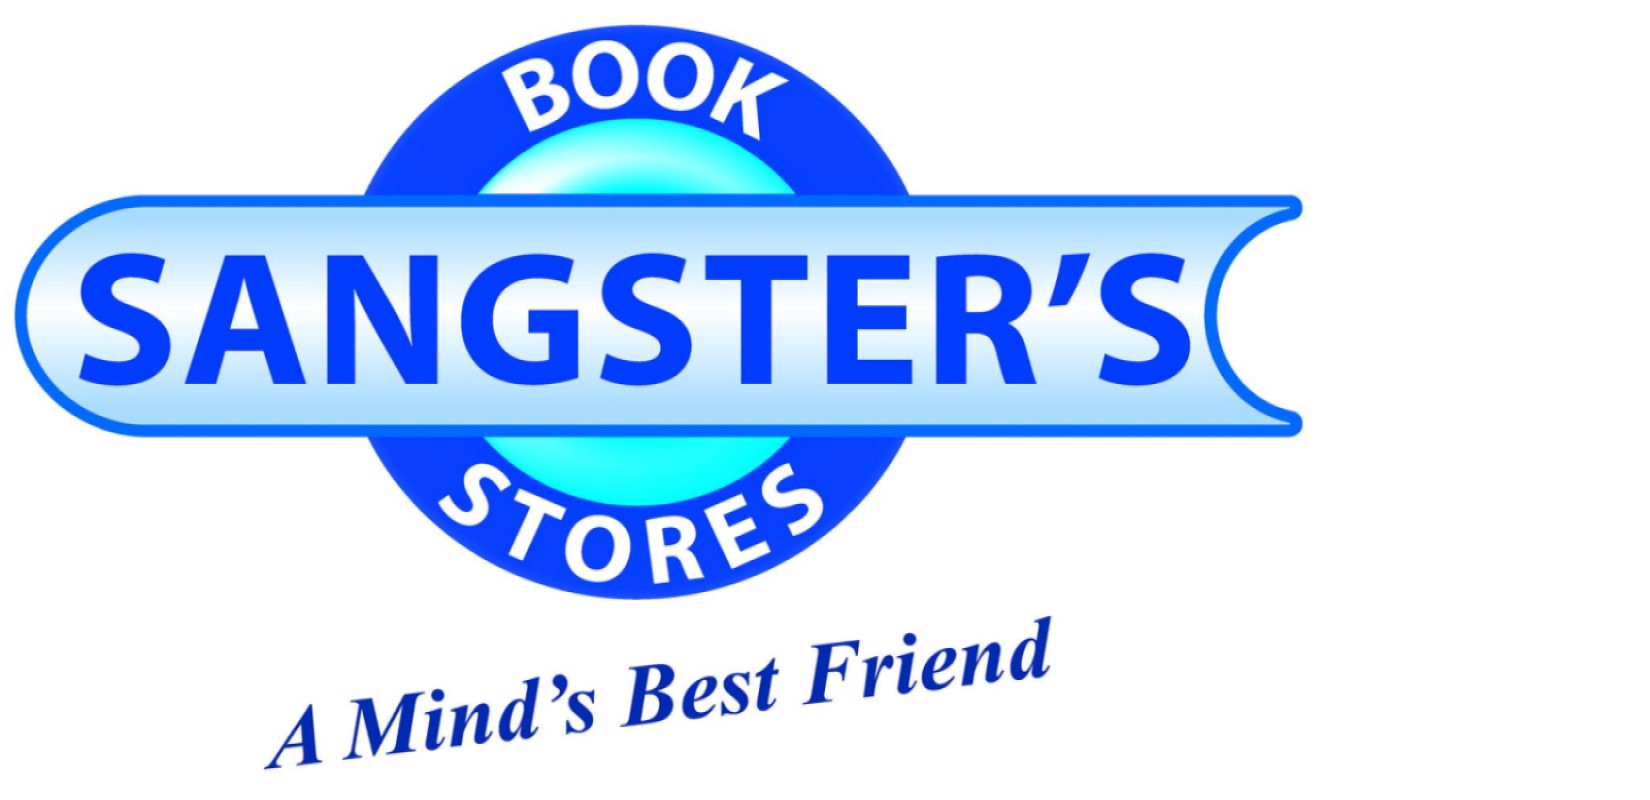 Sangster's Book Stores Ltd - Office Supplies